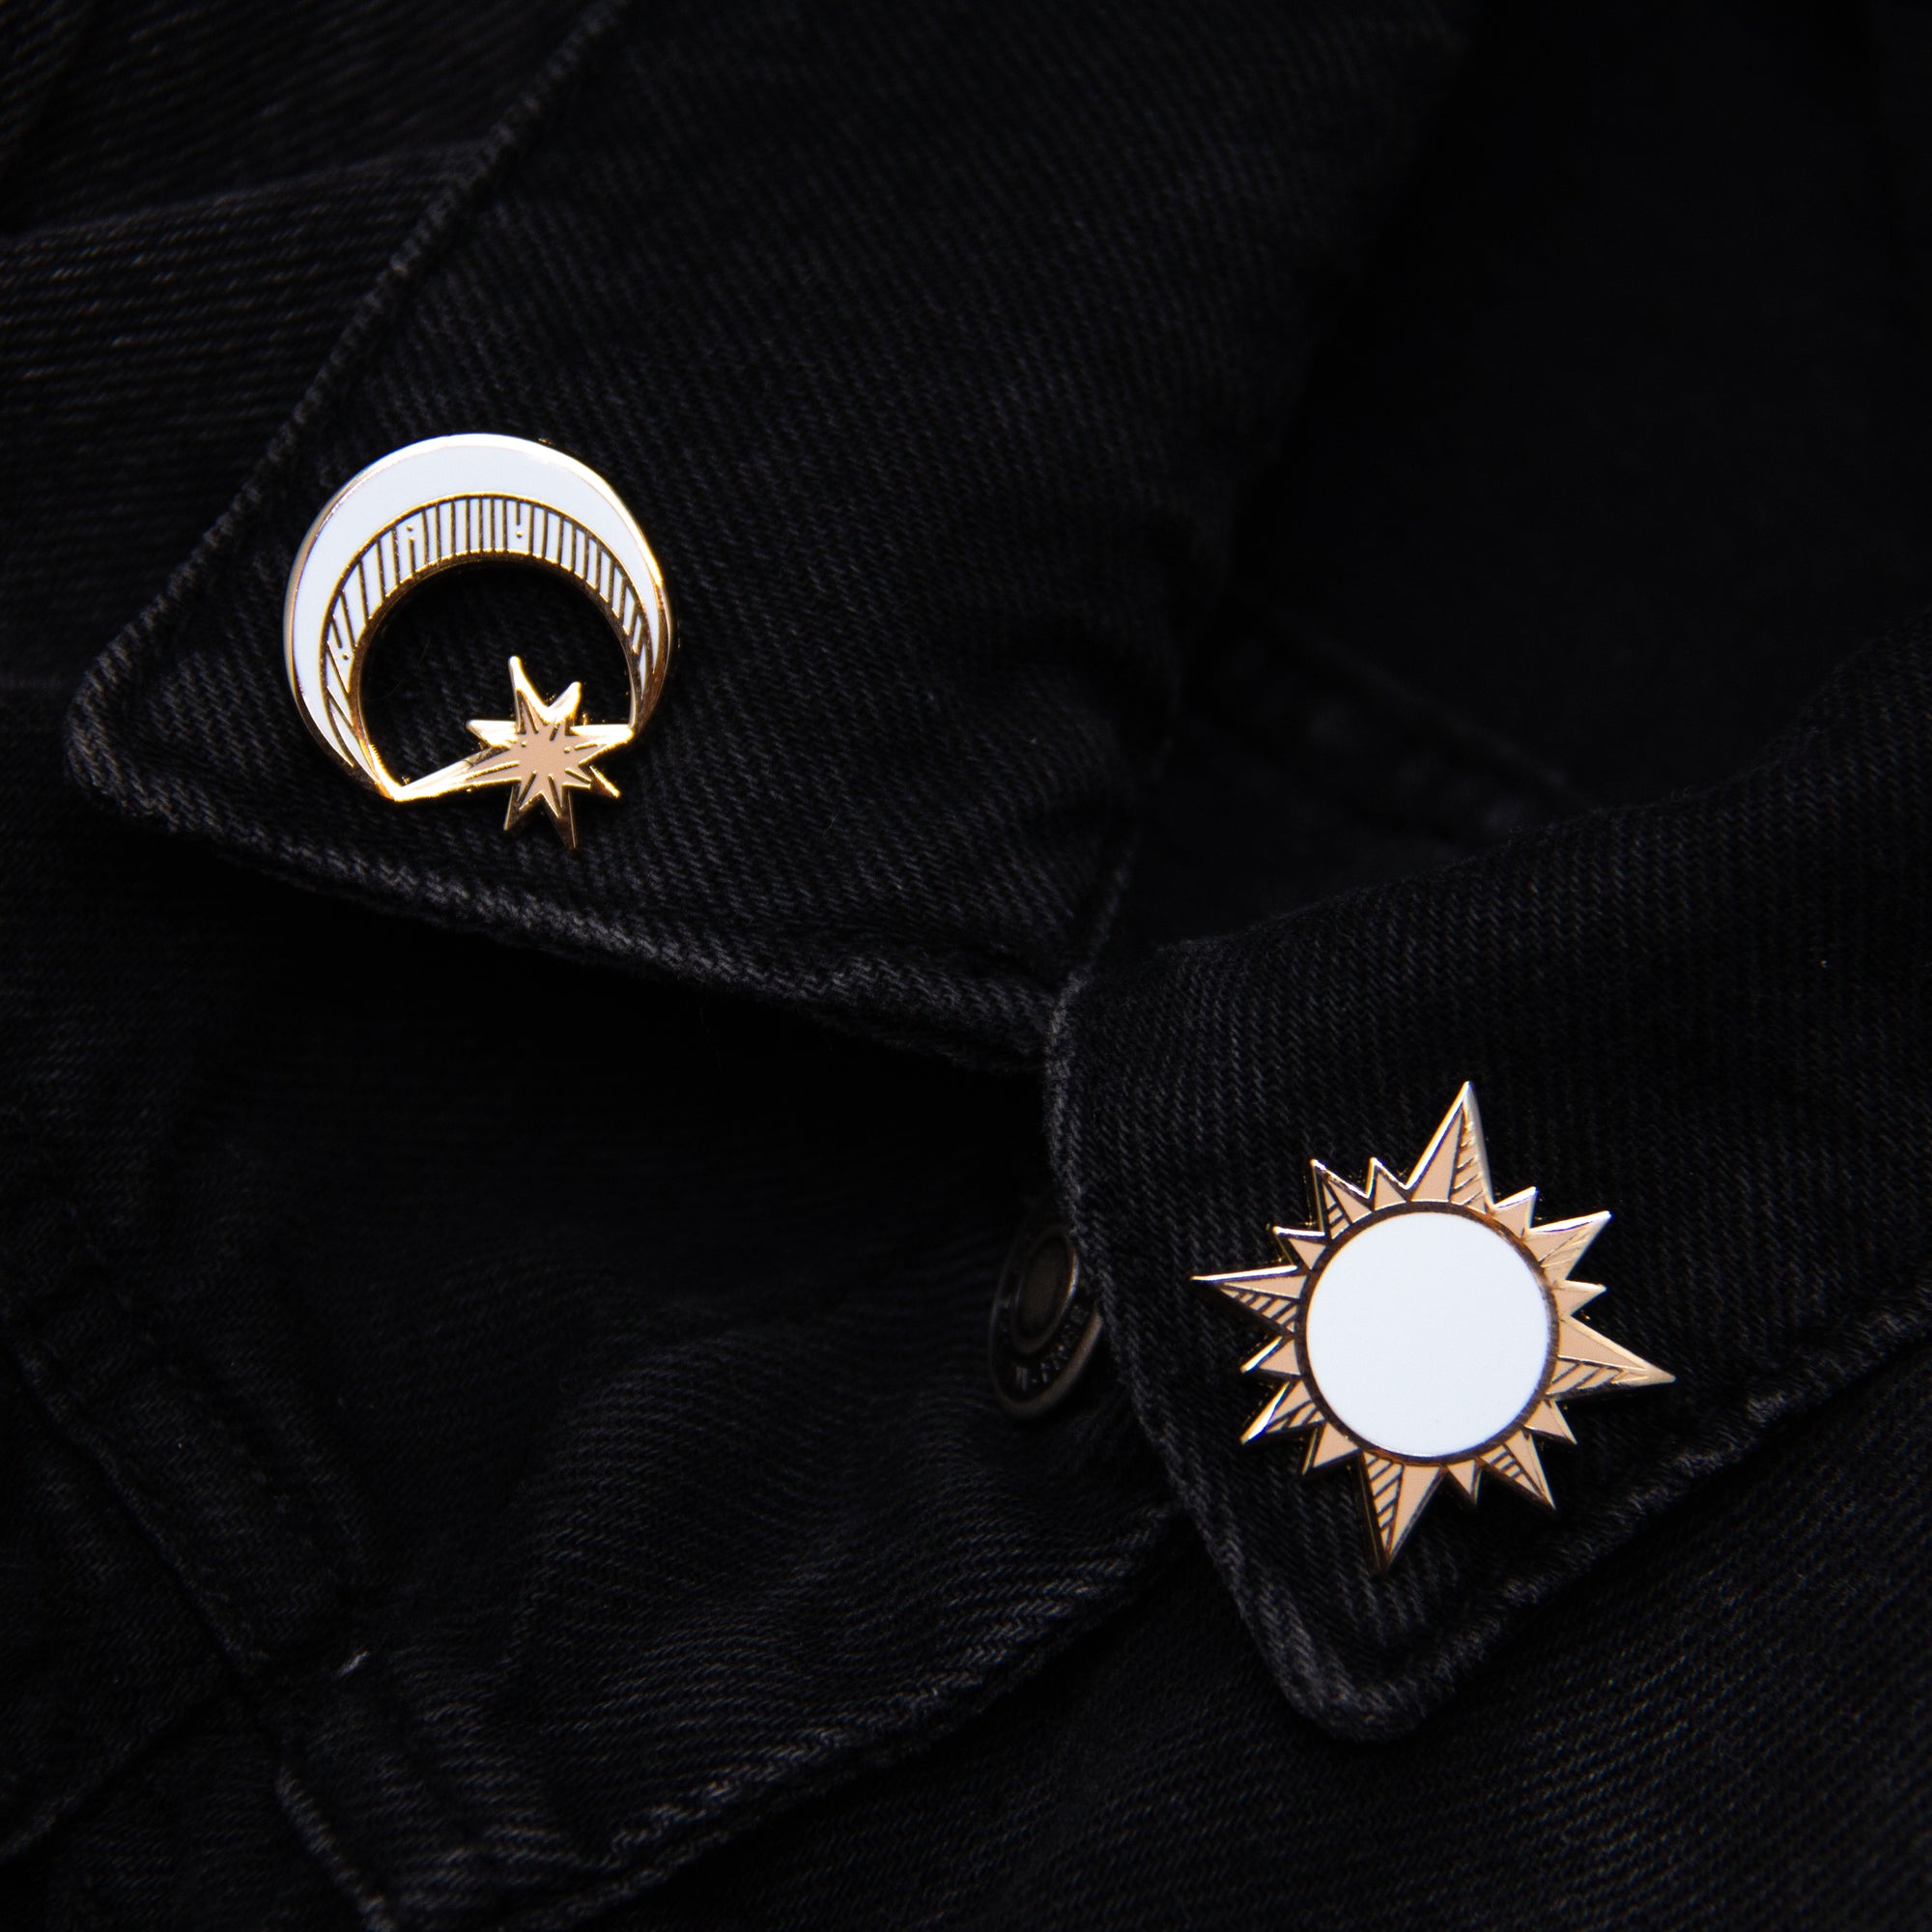 Gold Locking Pin Back – Shop I Am Luna Sol